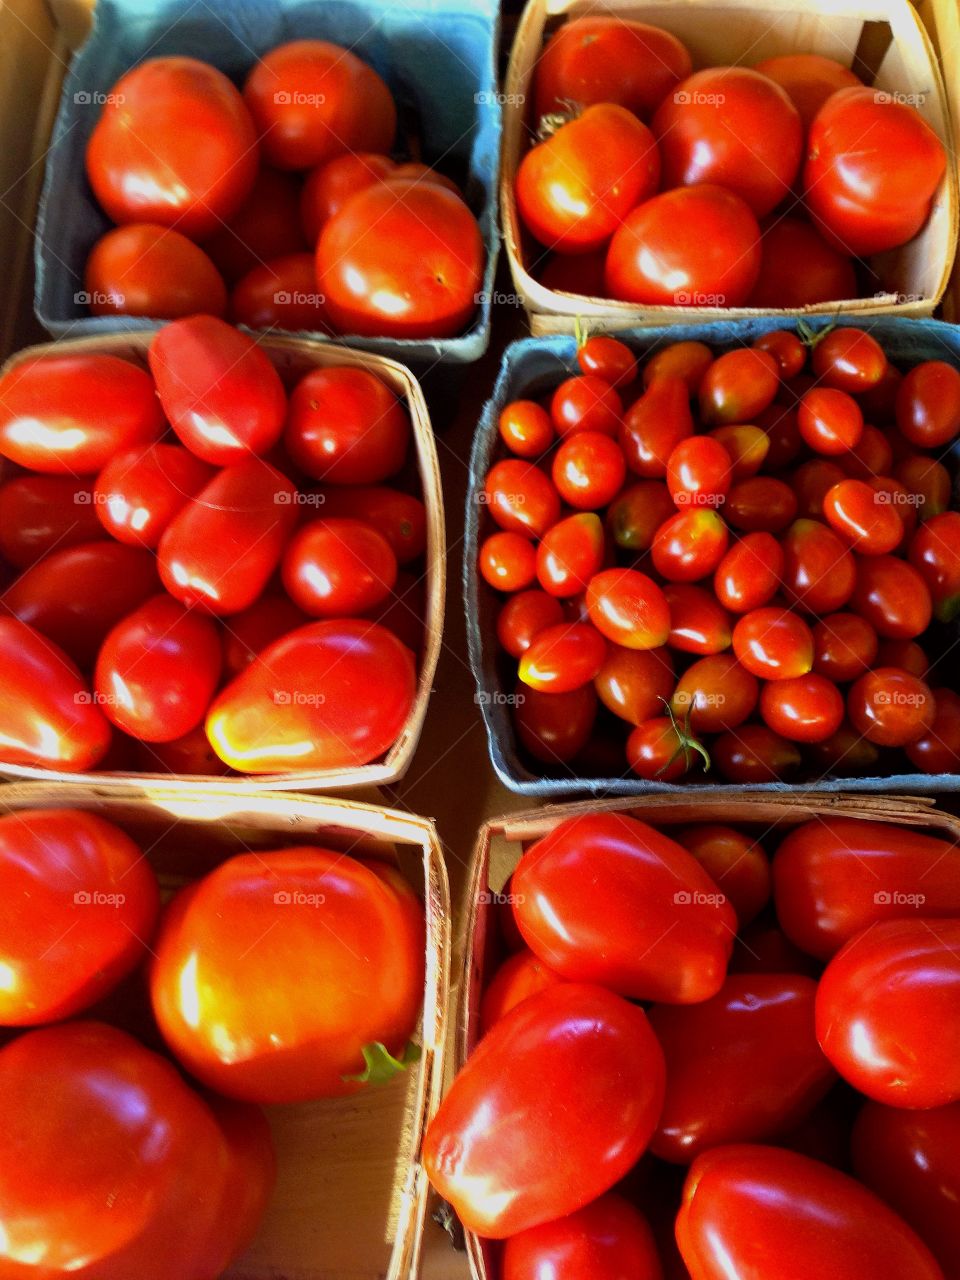 Tomatoes . Farmers market tomatoes.